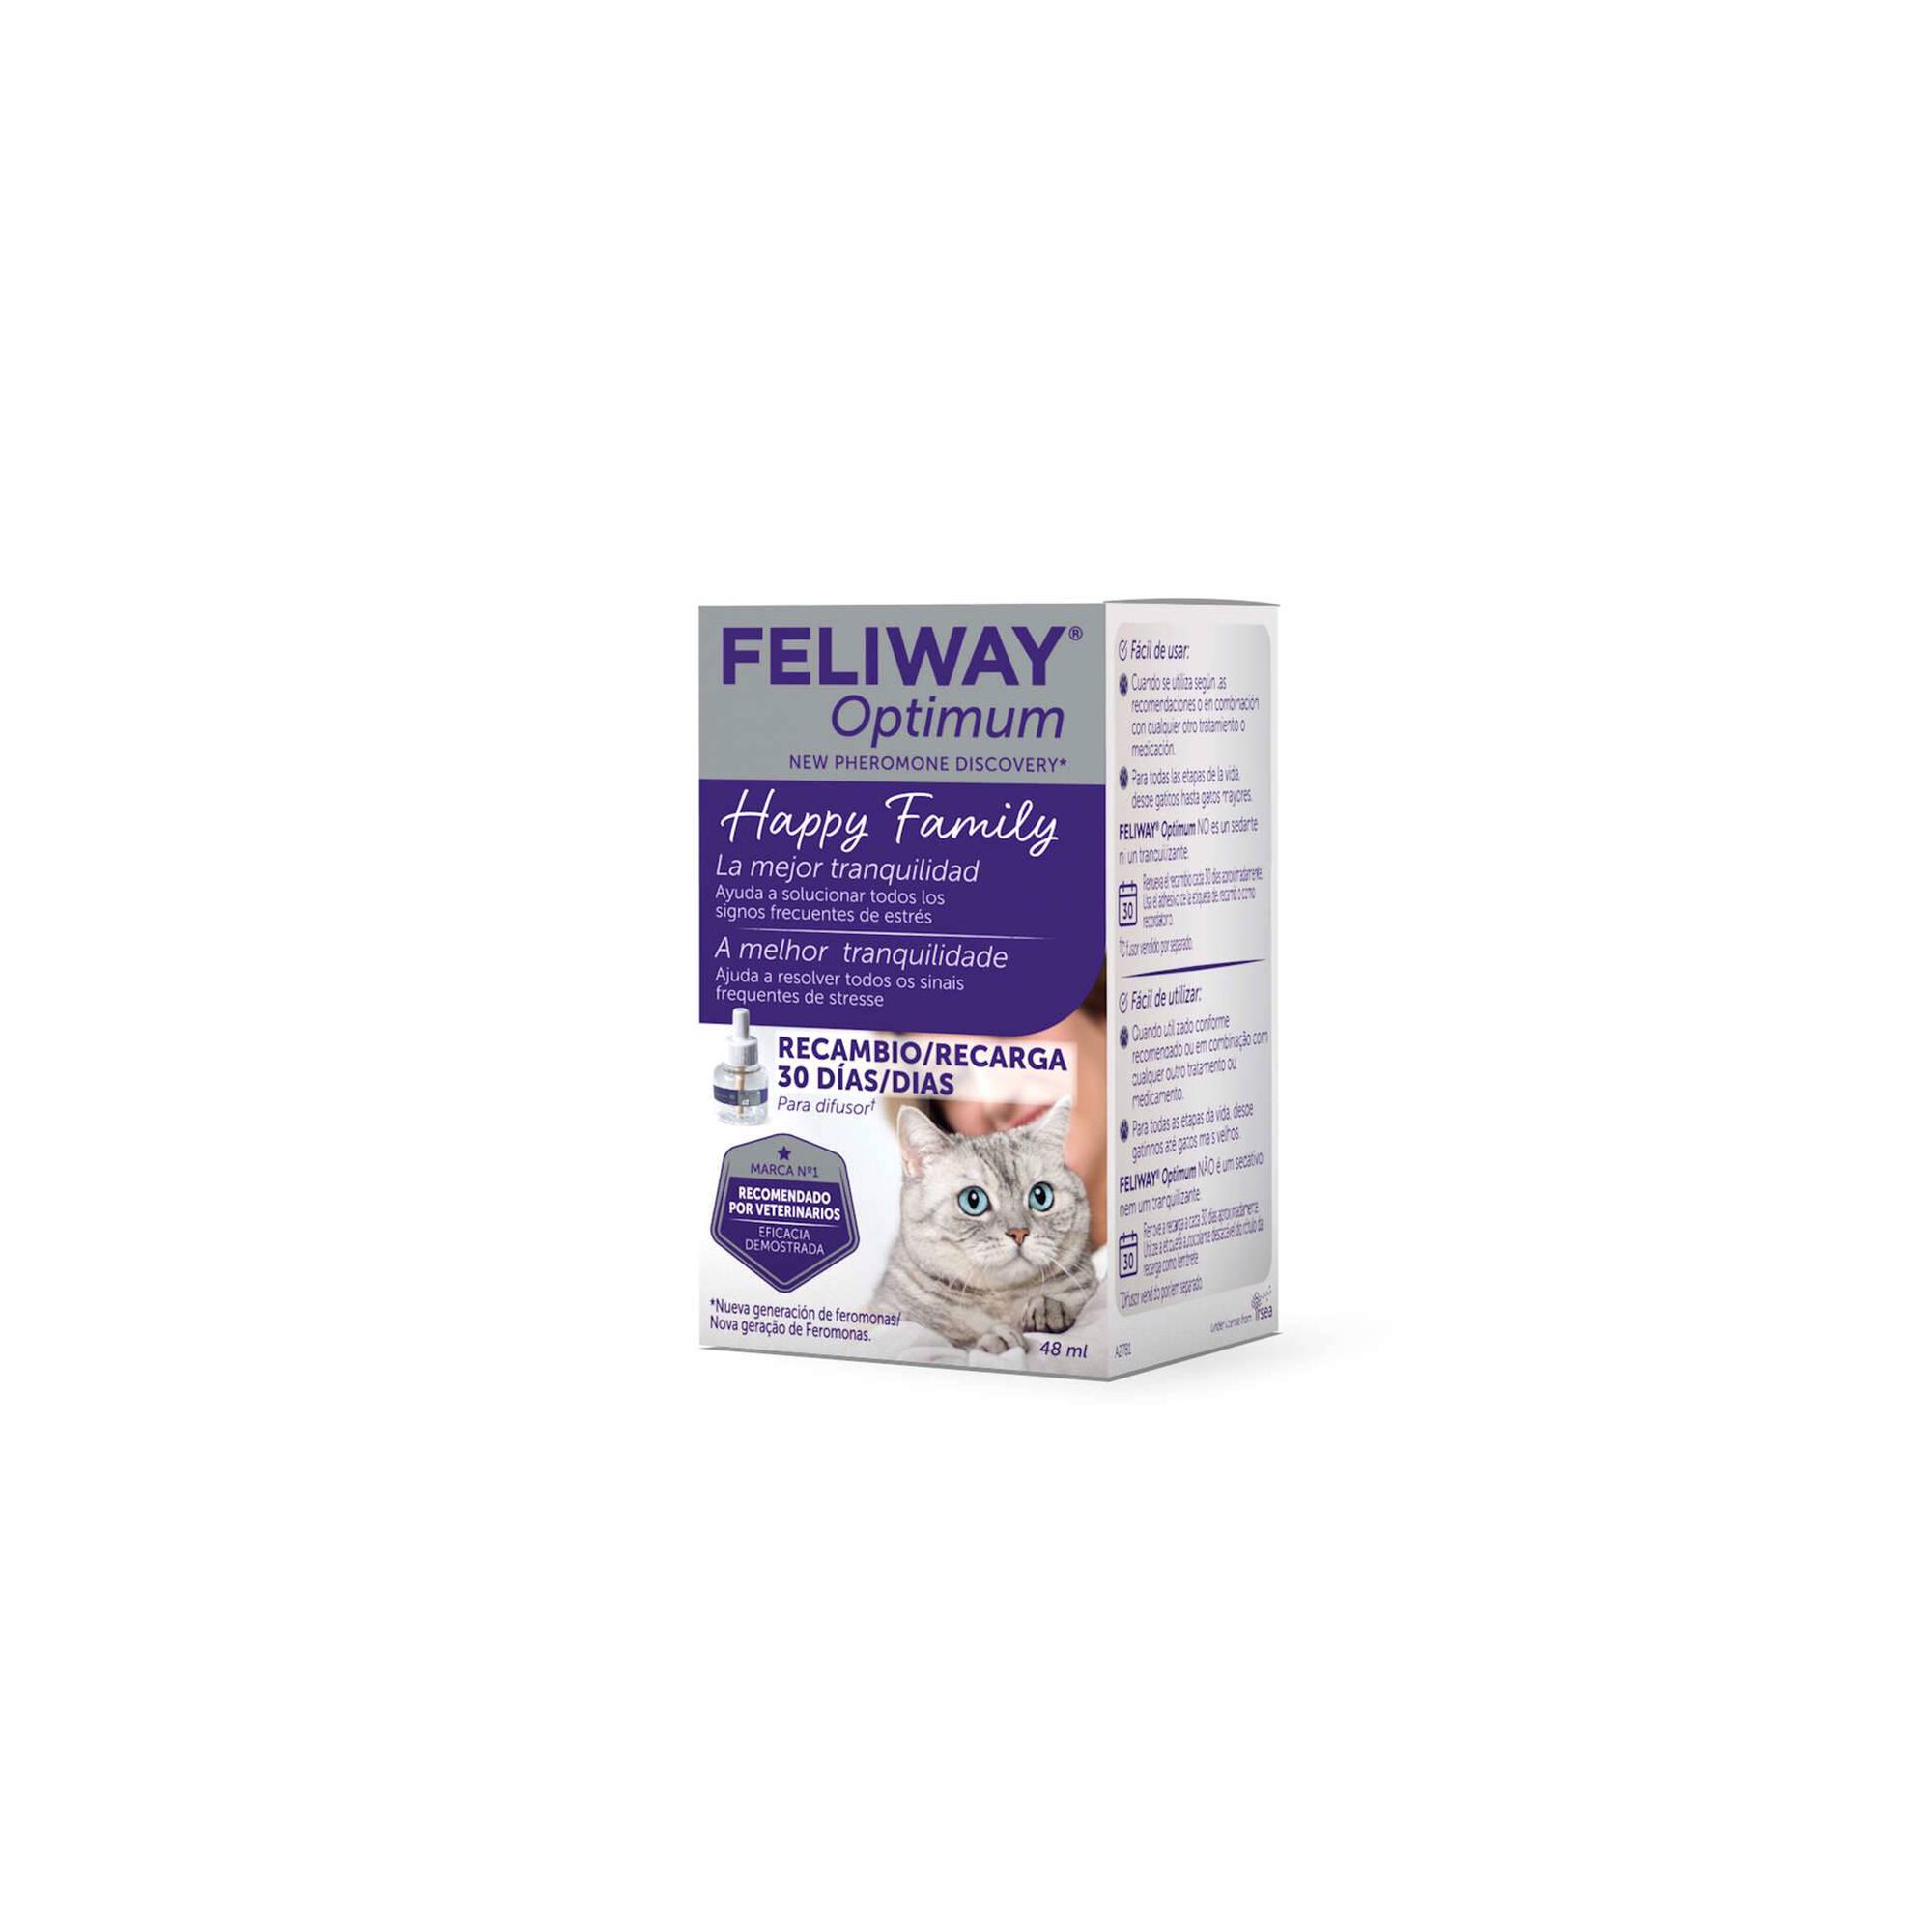 Recarga Feliway Optimum para Gato 48 ml